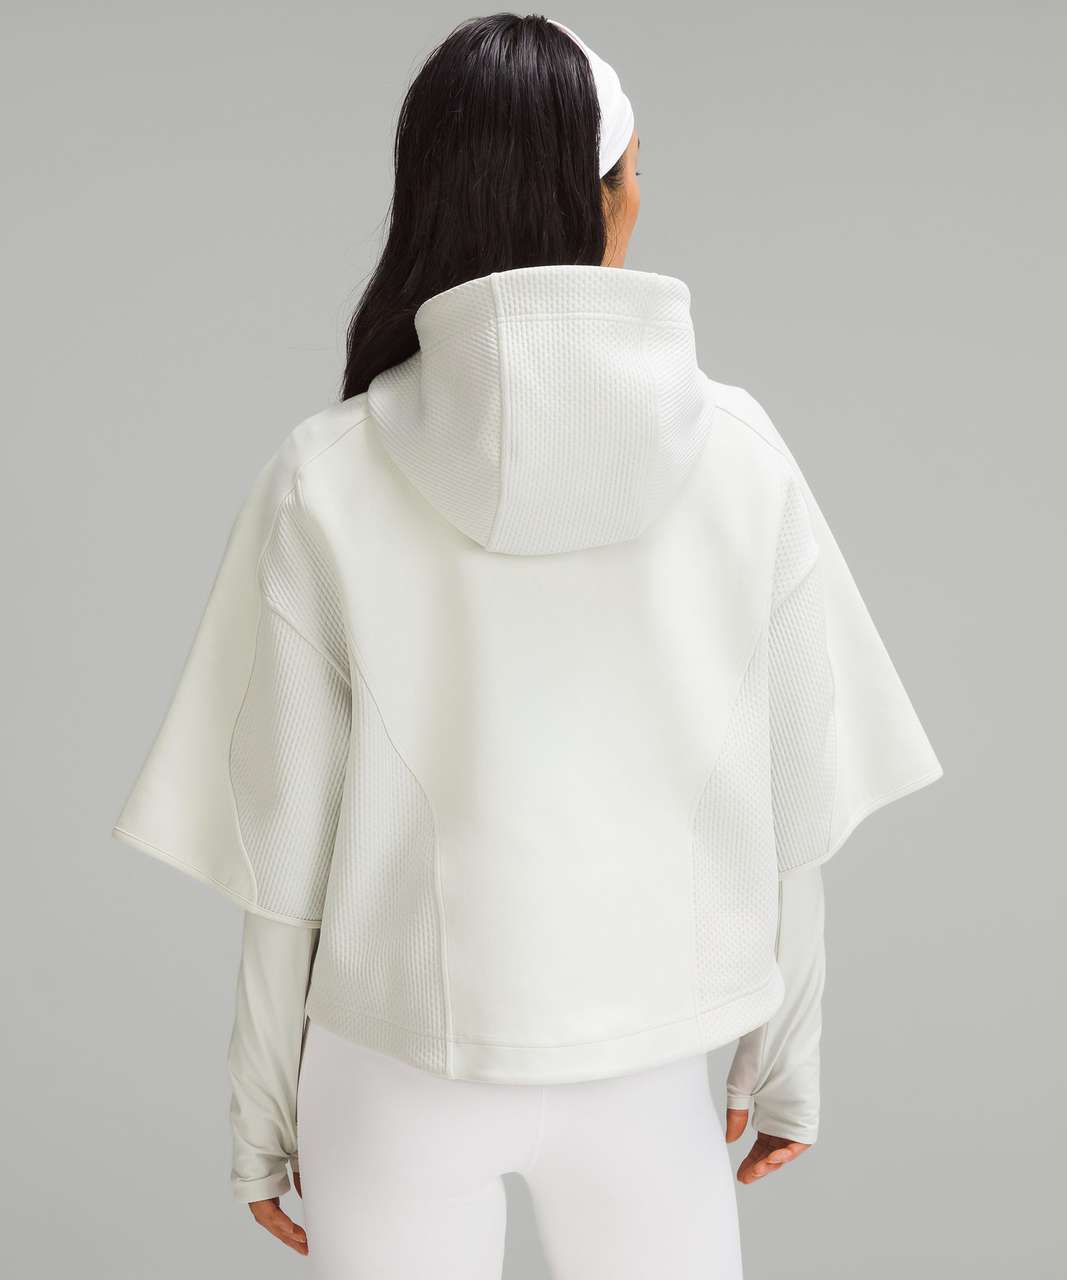 NWT Lululemon Mixed Fabric Half-Zip Pullover,XS